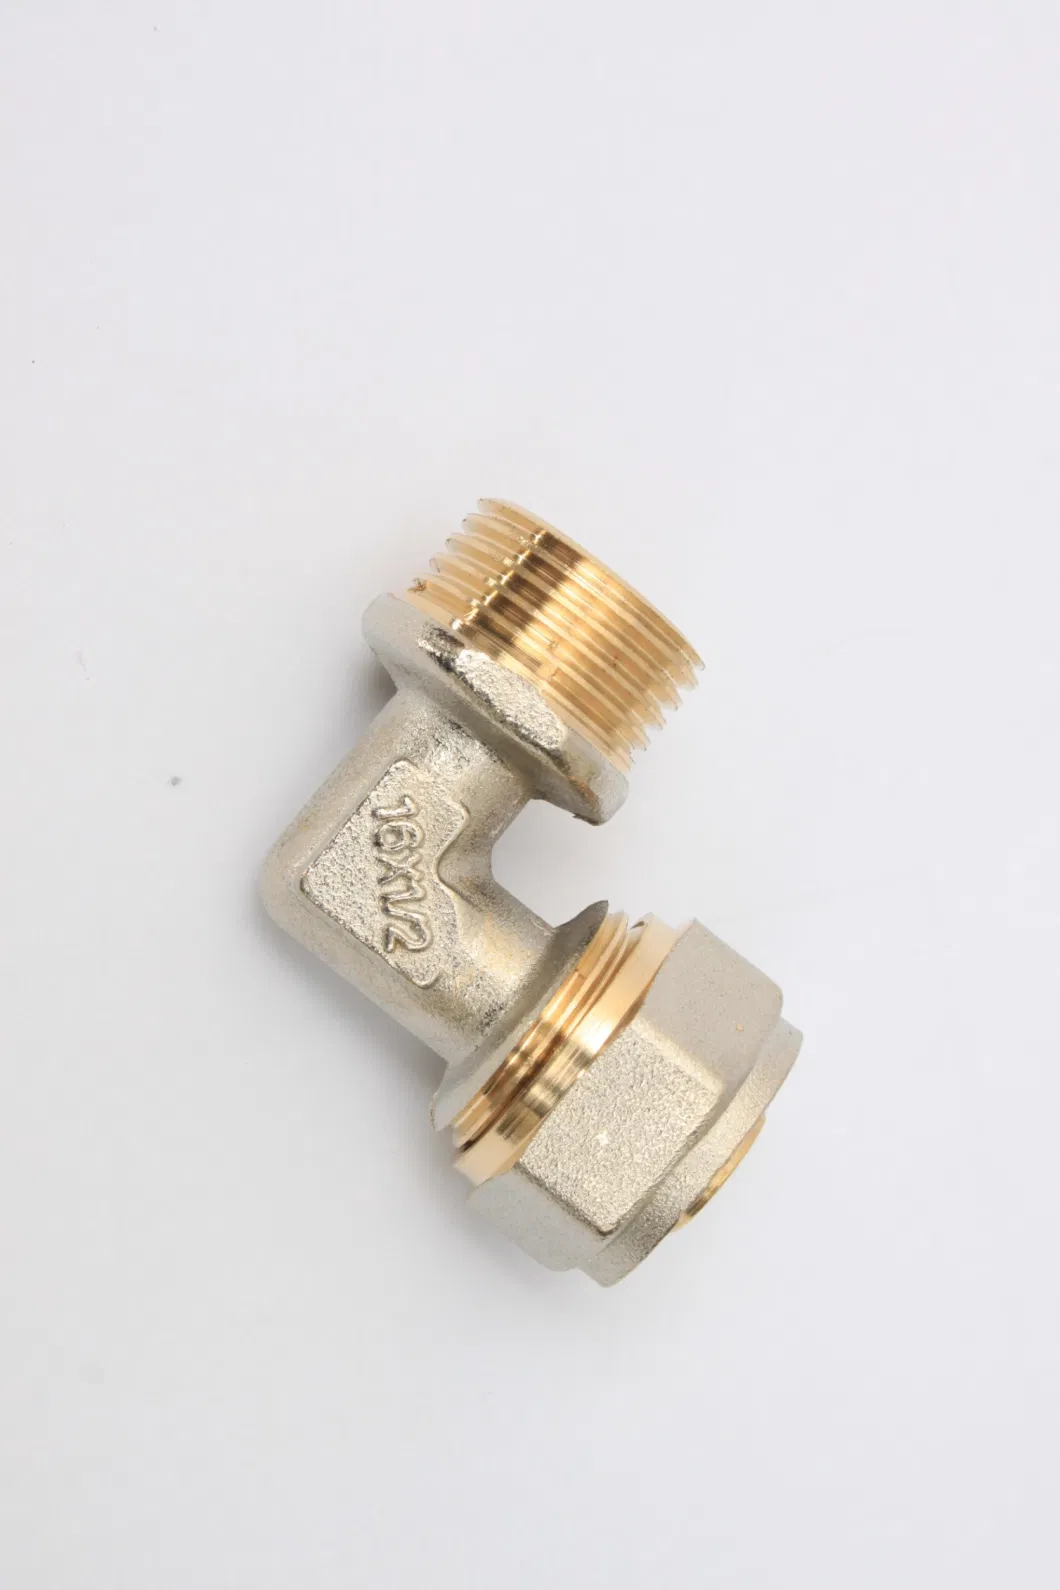 Male Coupling Brass Compression Fittings for Pex-Al-Pex Pipe